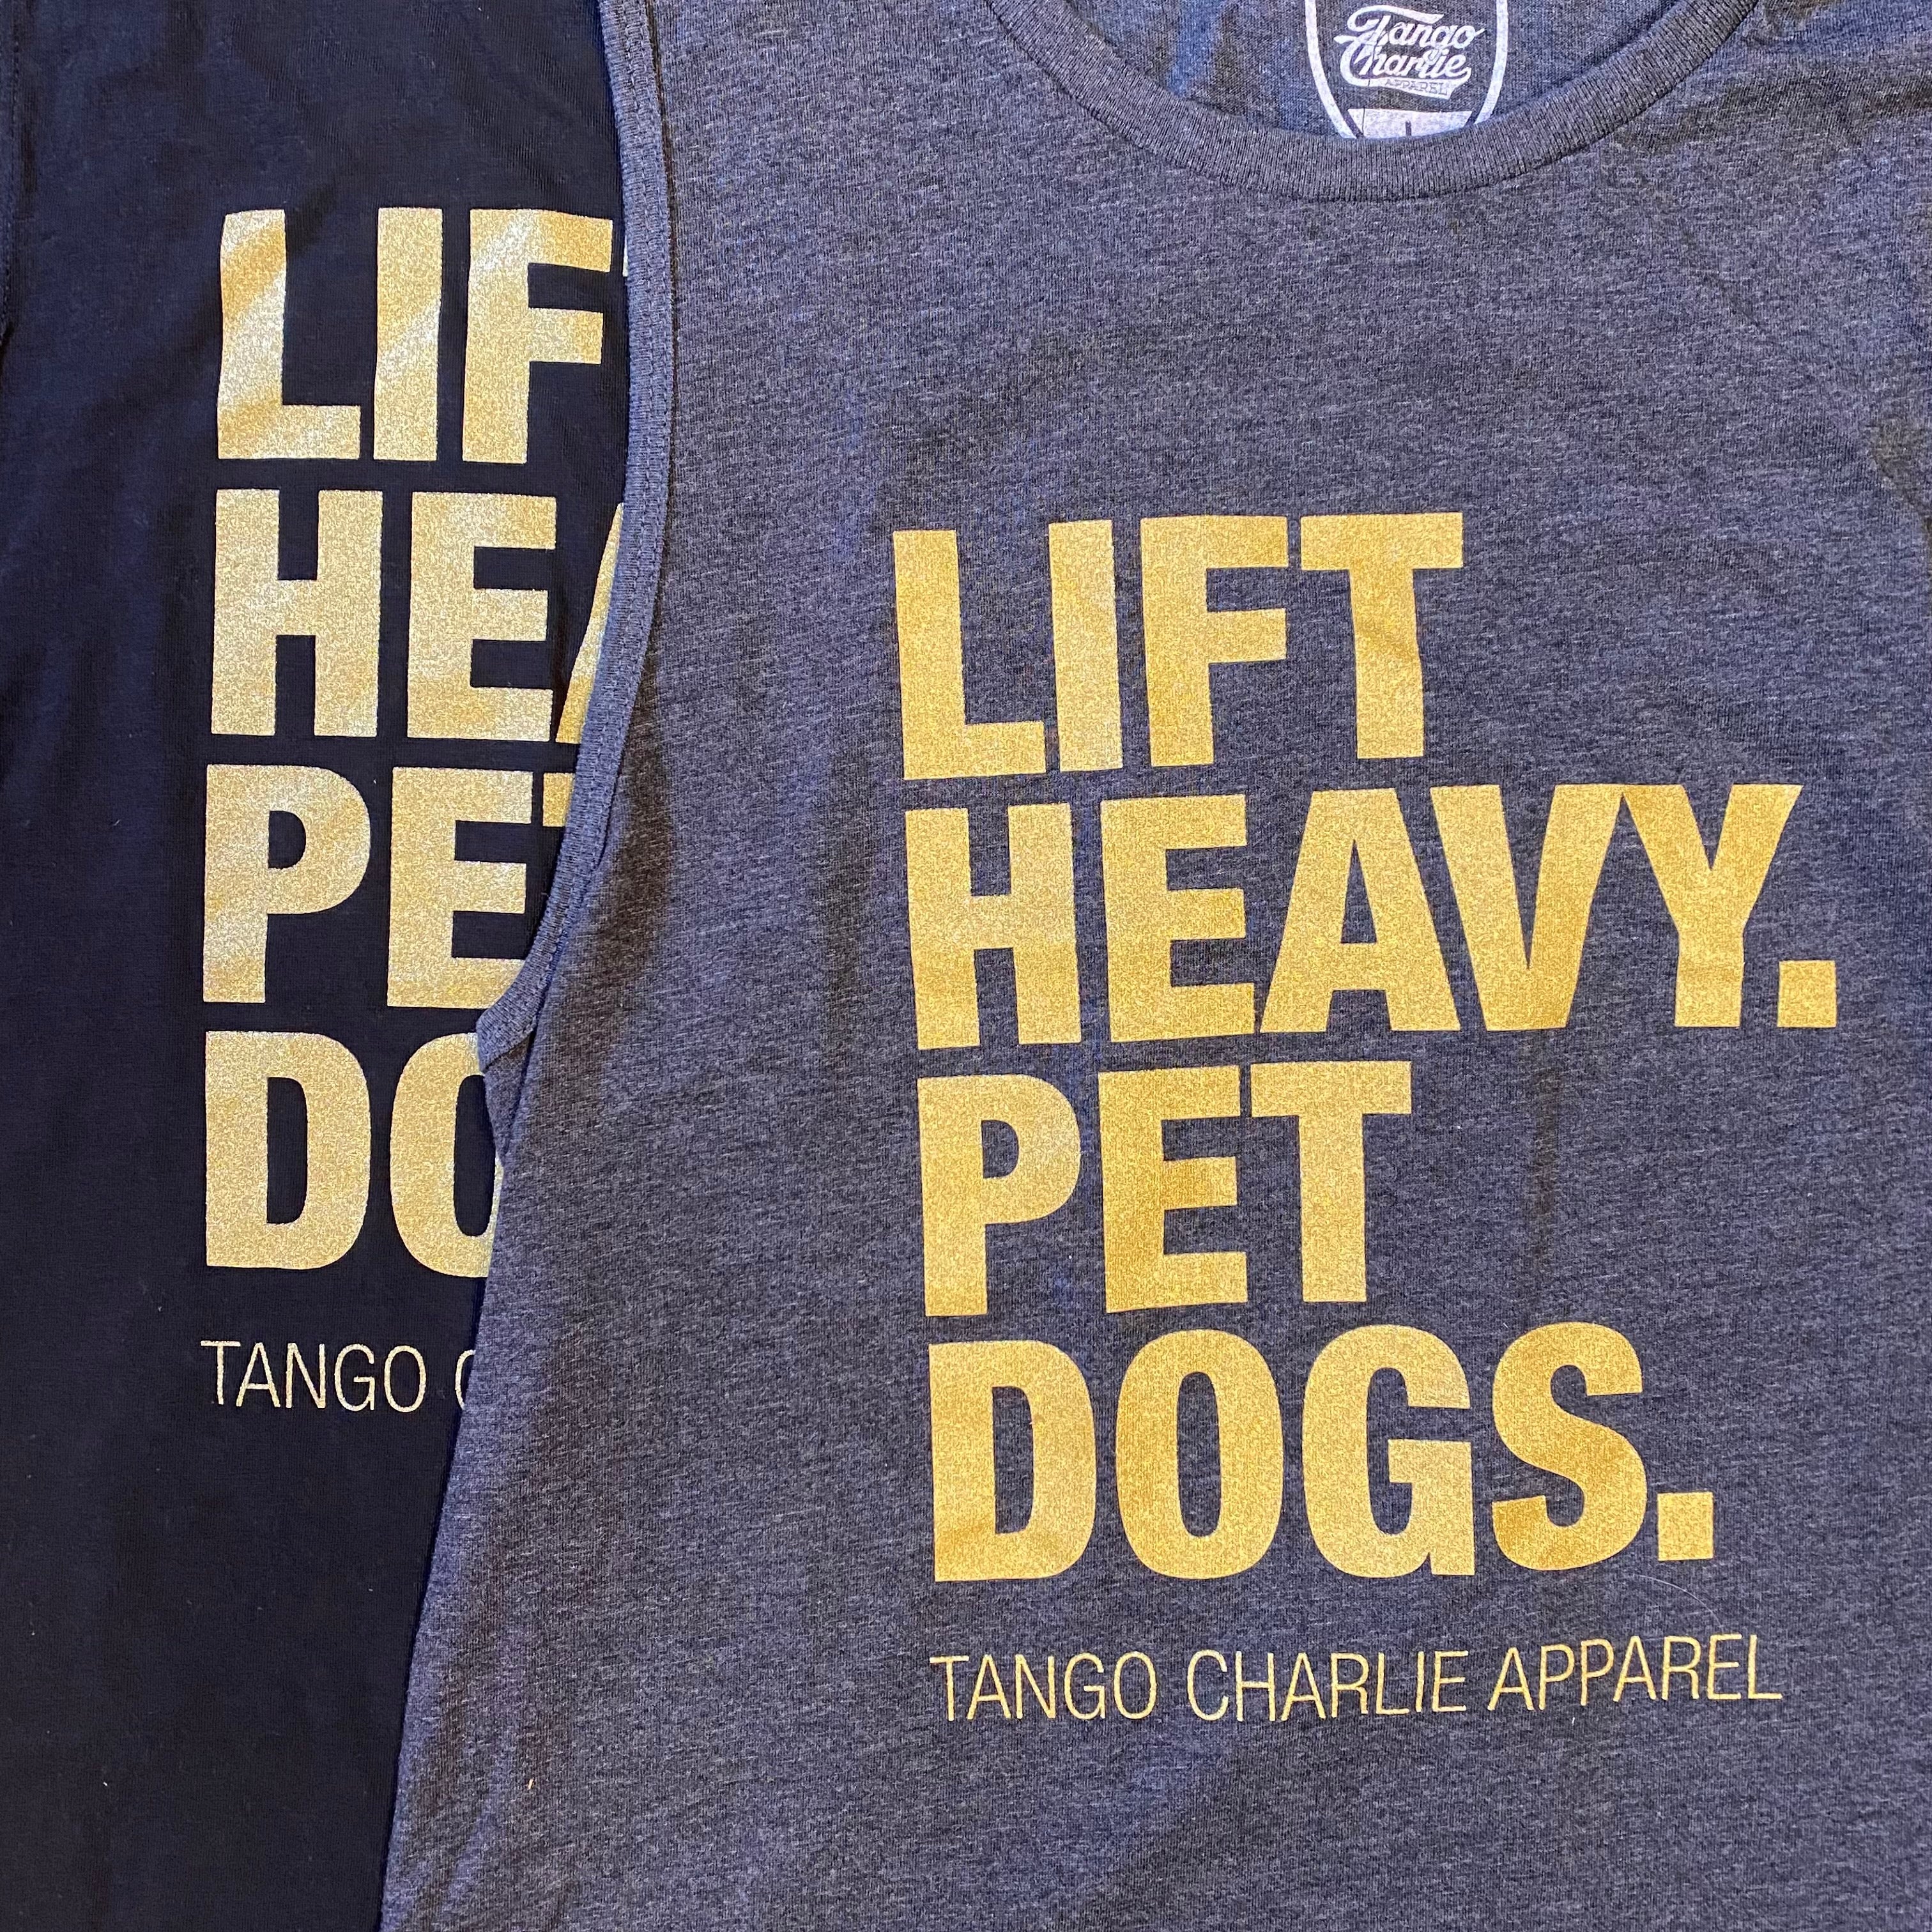 "GOLD Lift Heavy. Pet Dogs." - Womens Muscle Tank